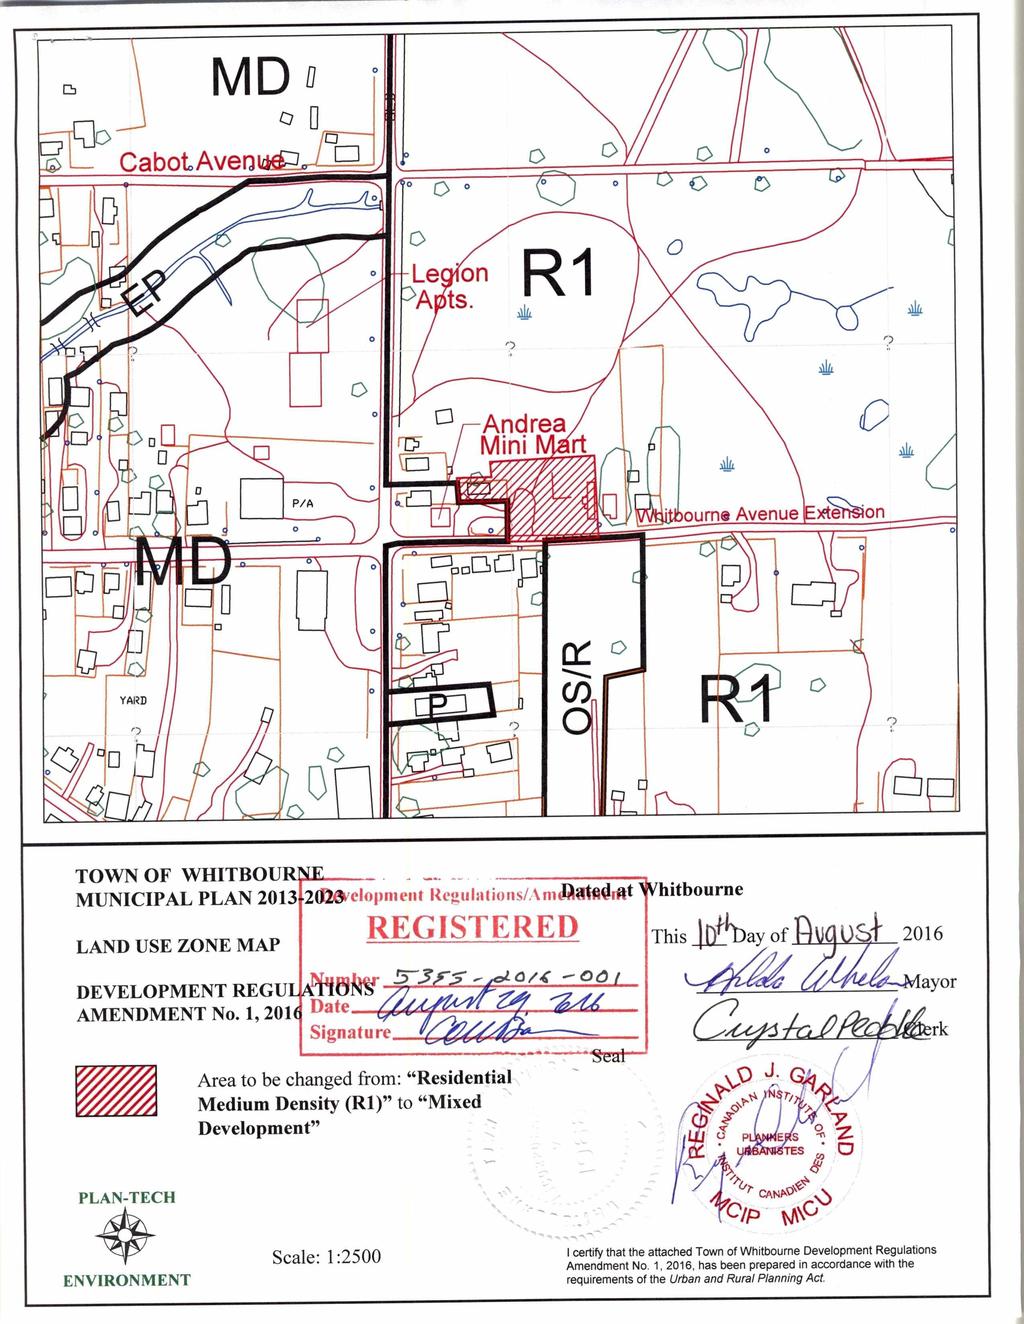 TOWN OF WHITBOU MUNICIPAL PLAN 2013 26128velopment RegulationsAmagOdritt hitbourne LAND USE ZONE MAP DEVELOPMENT REGU AMENDMENT No.